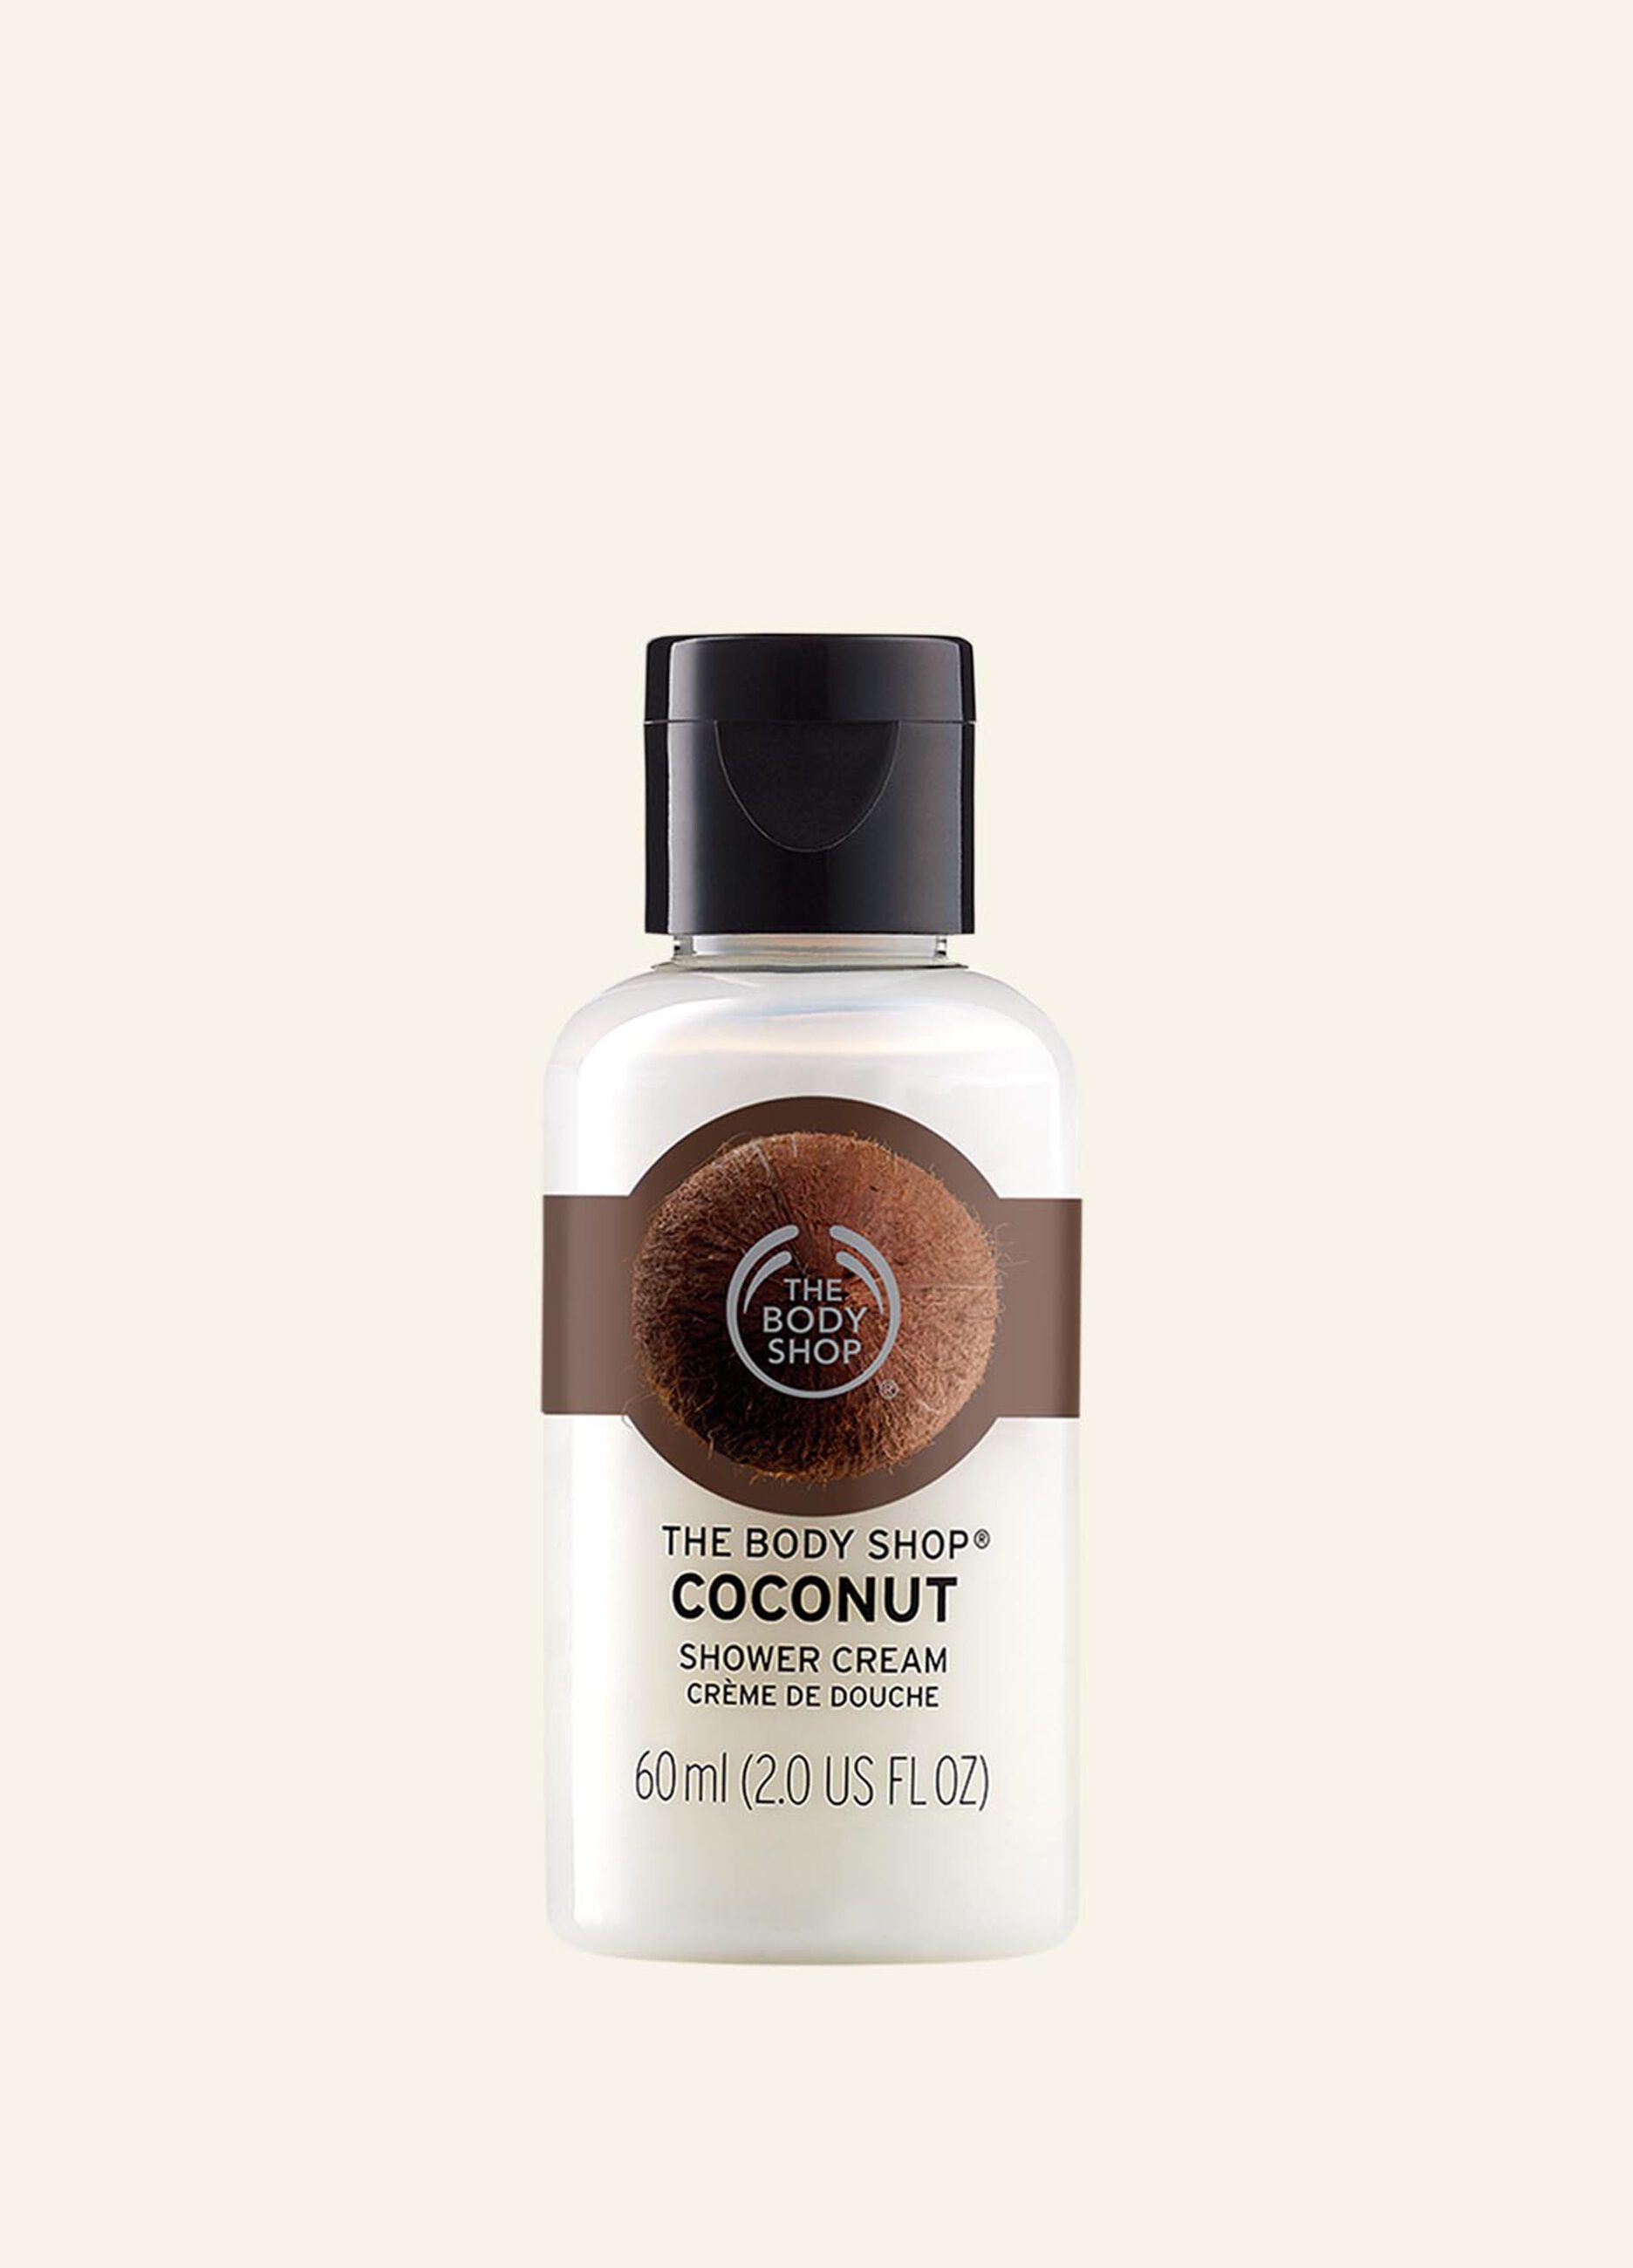 The Body Shop coconut shower cream 60ml